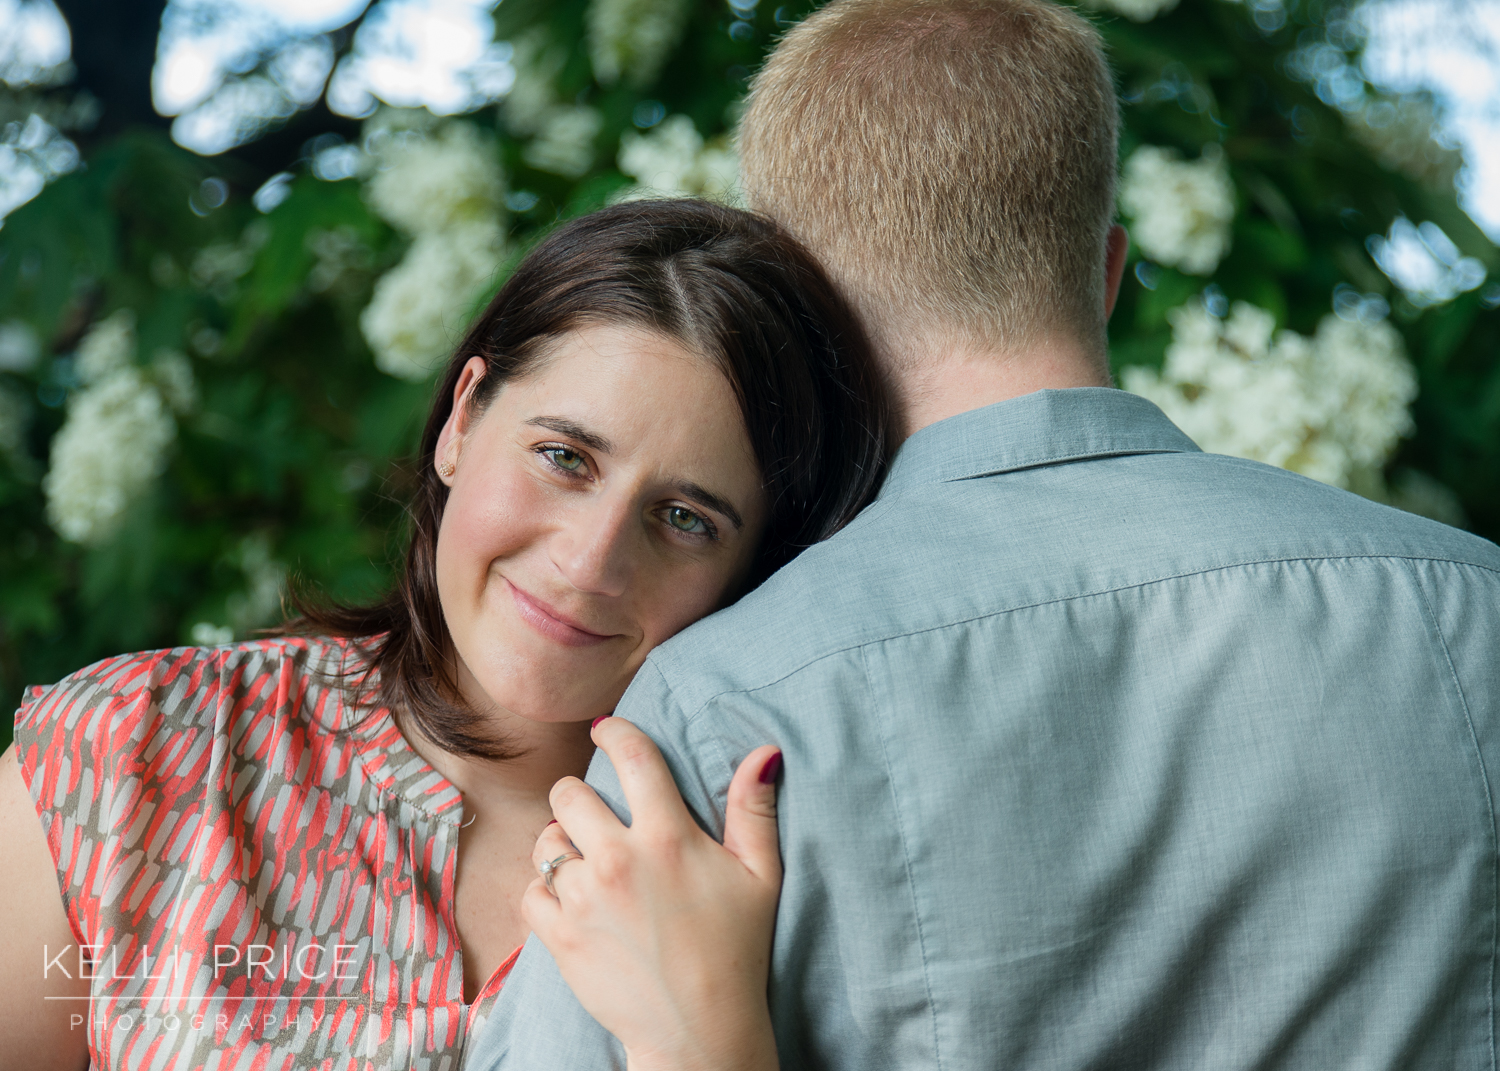 Engagement Session at Piedmont Park, Atlanta - Engagement Ring